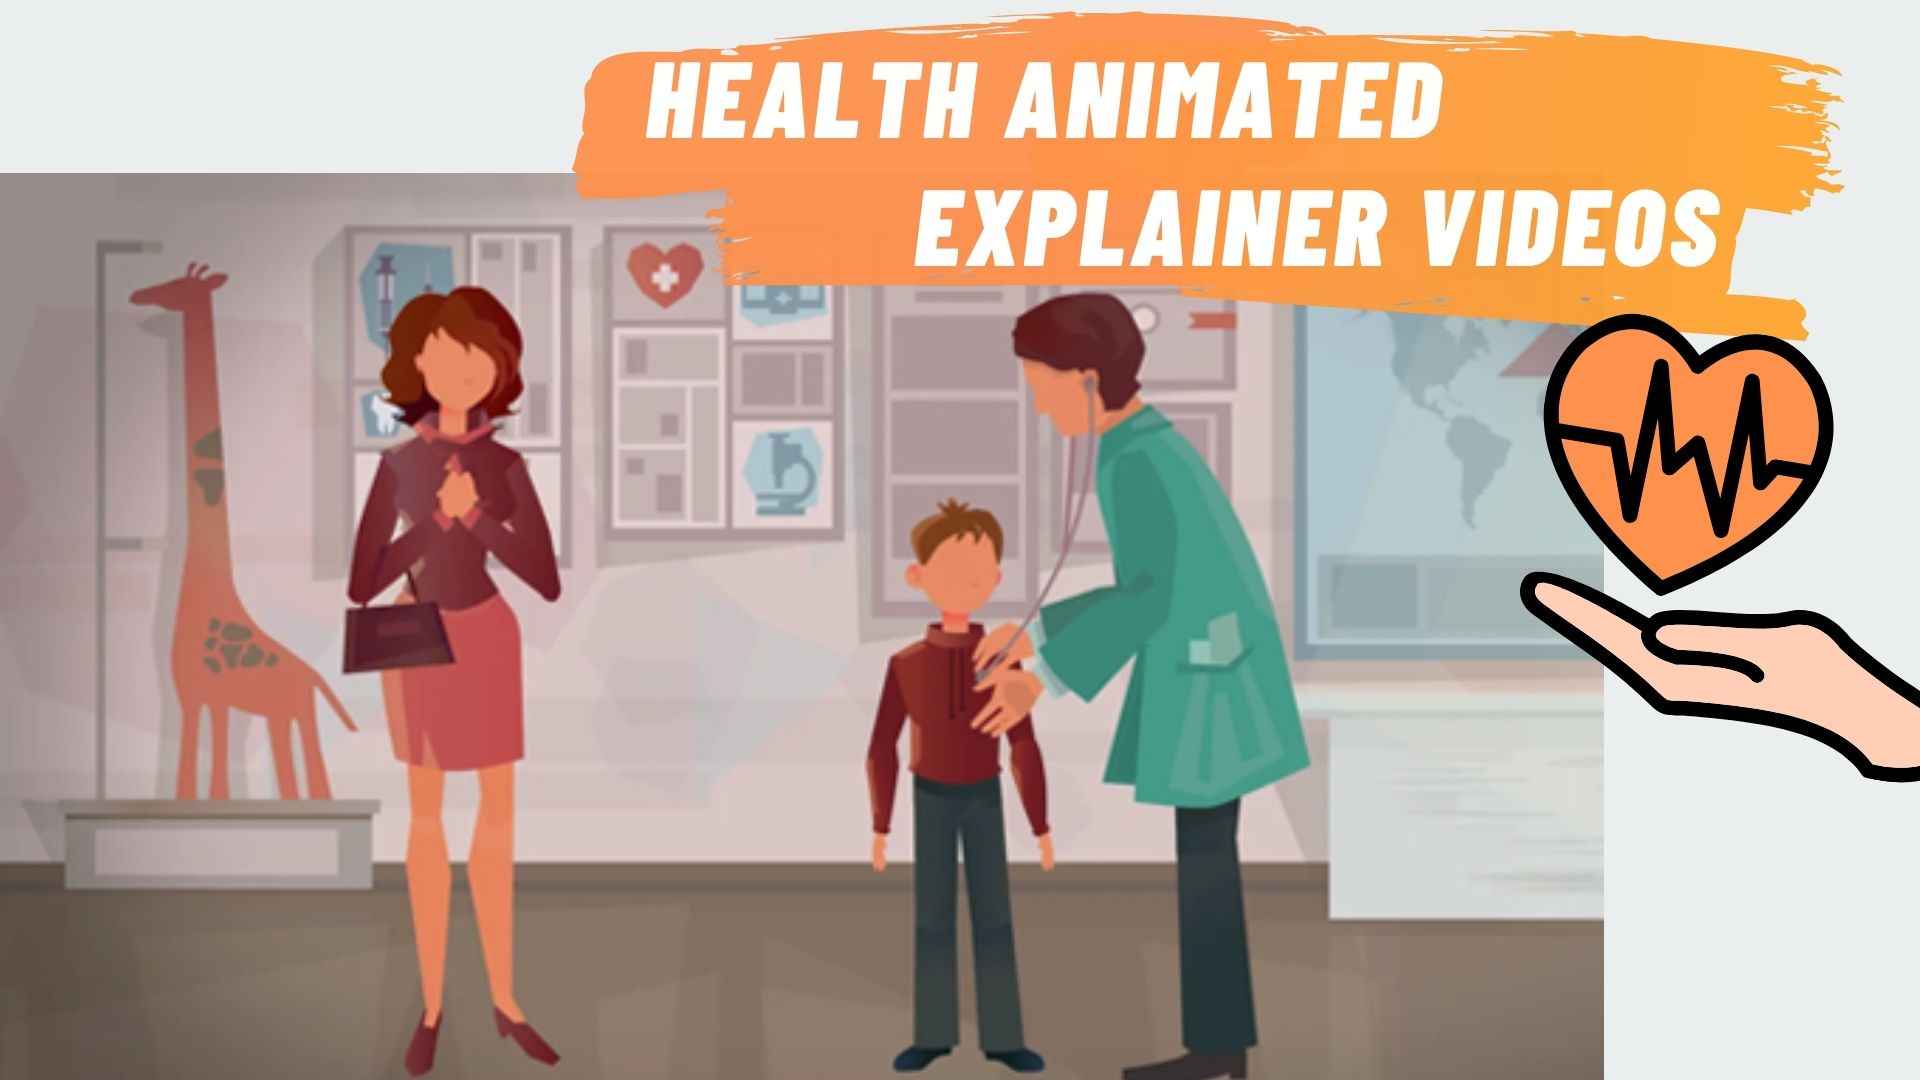 Health animated explainer videos